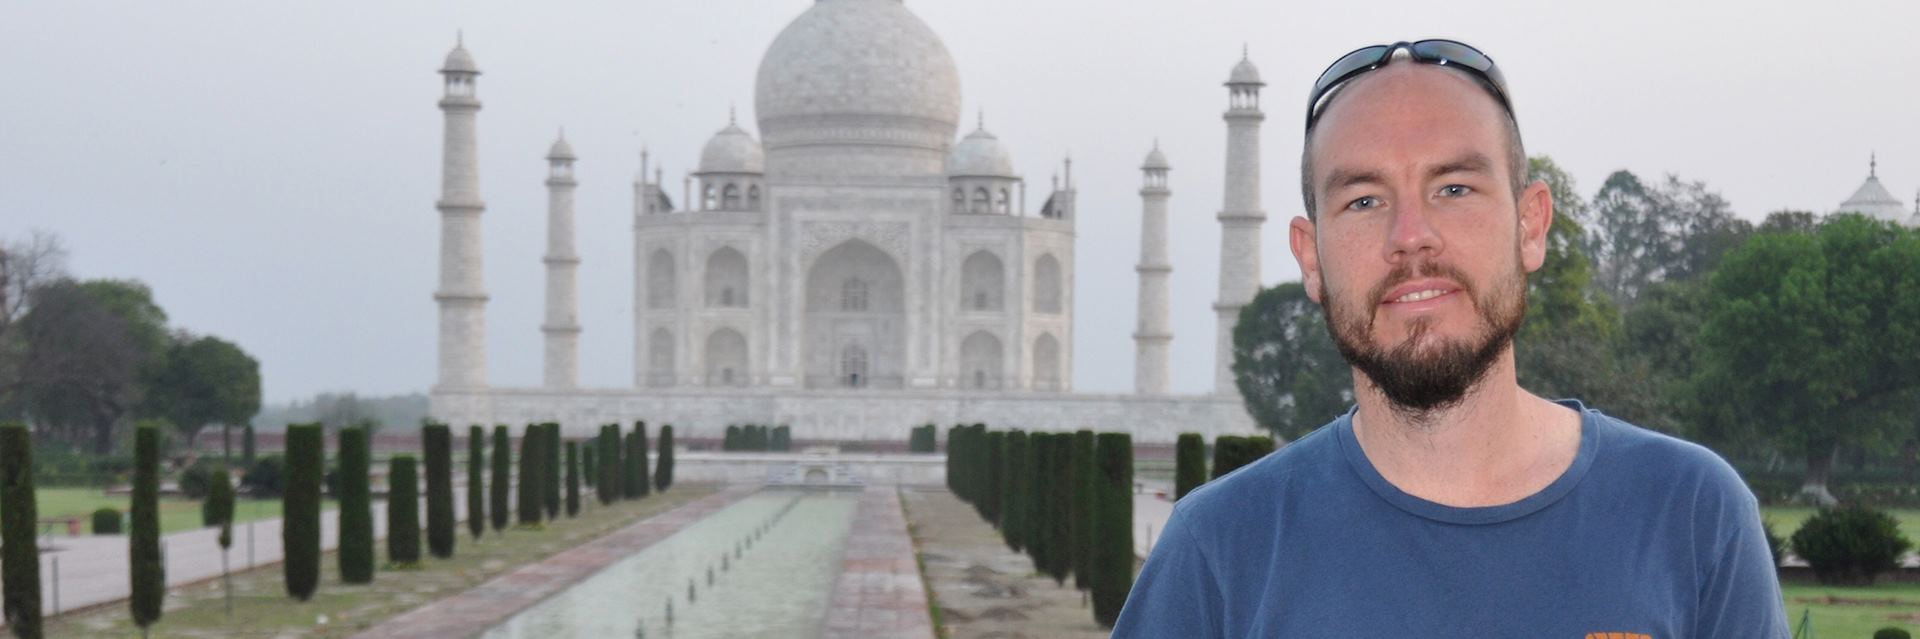 Graham at the Taj Mahal, Agra